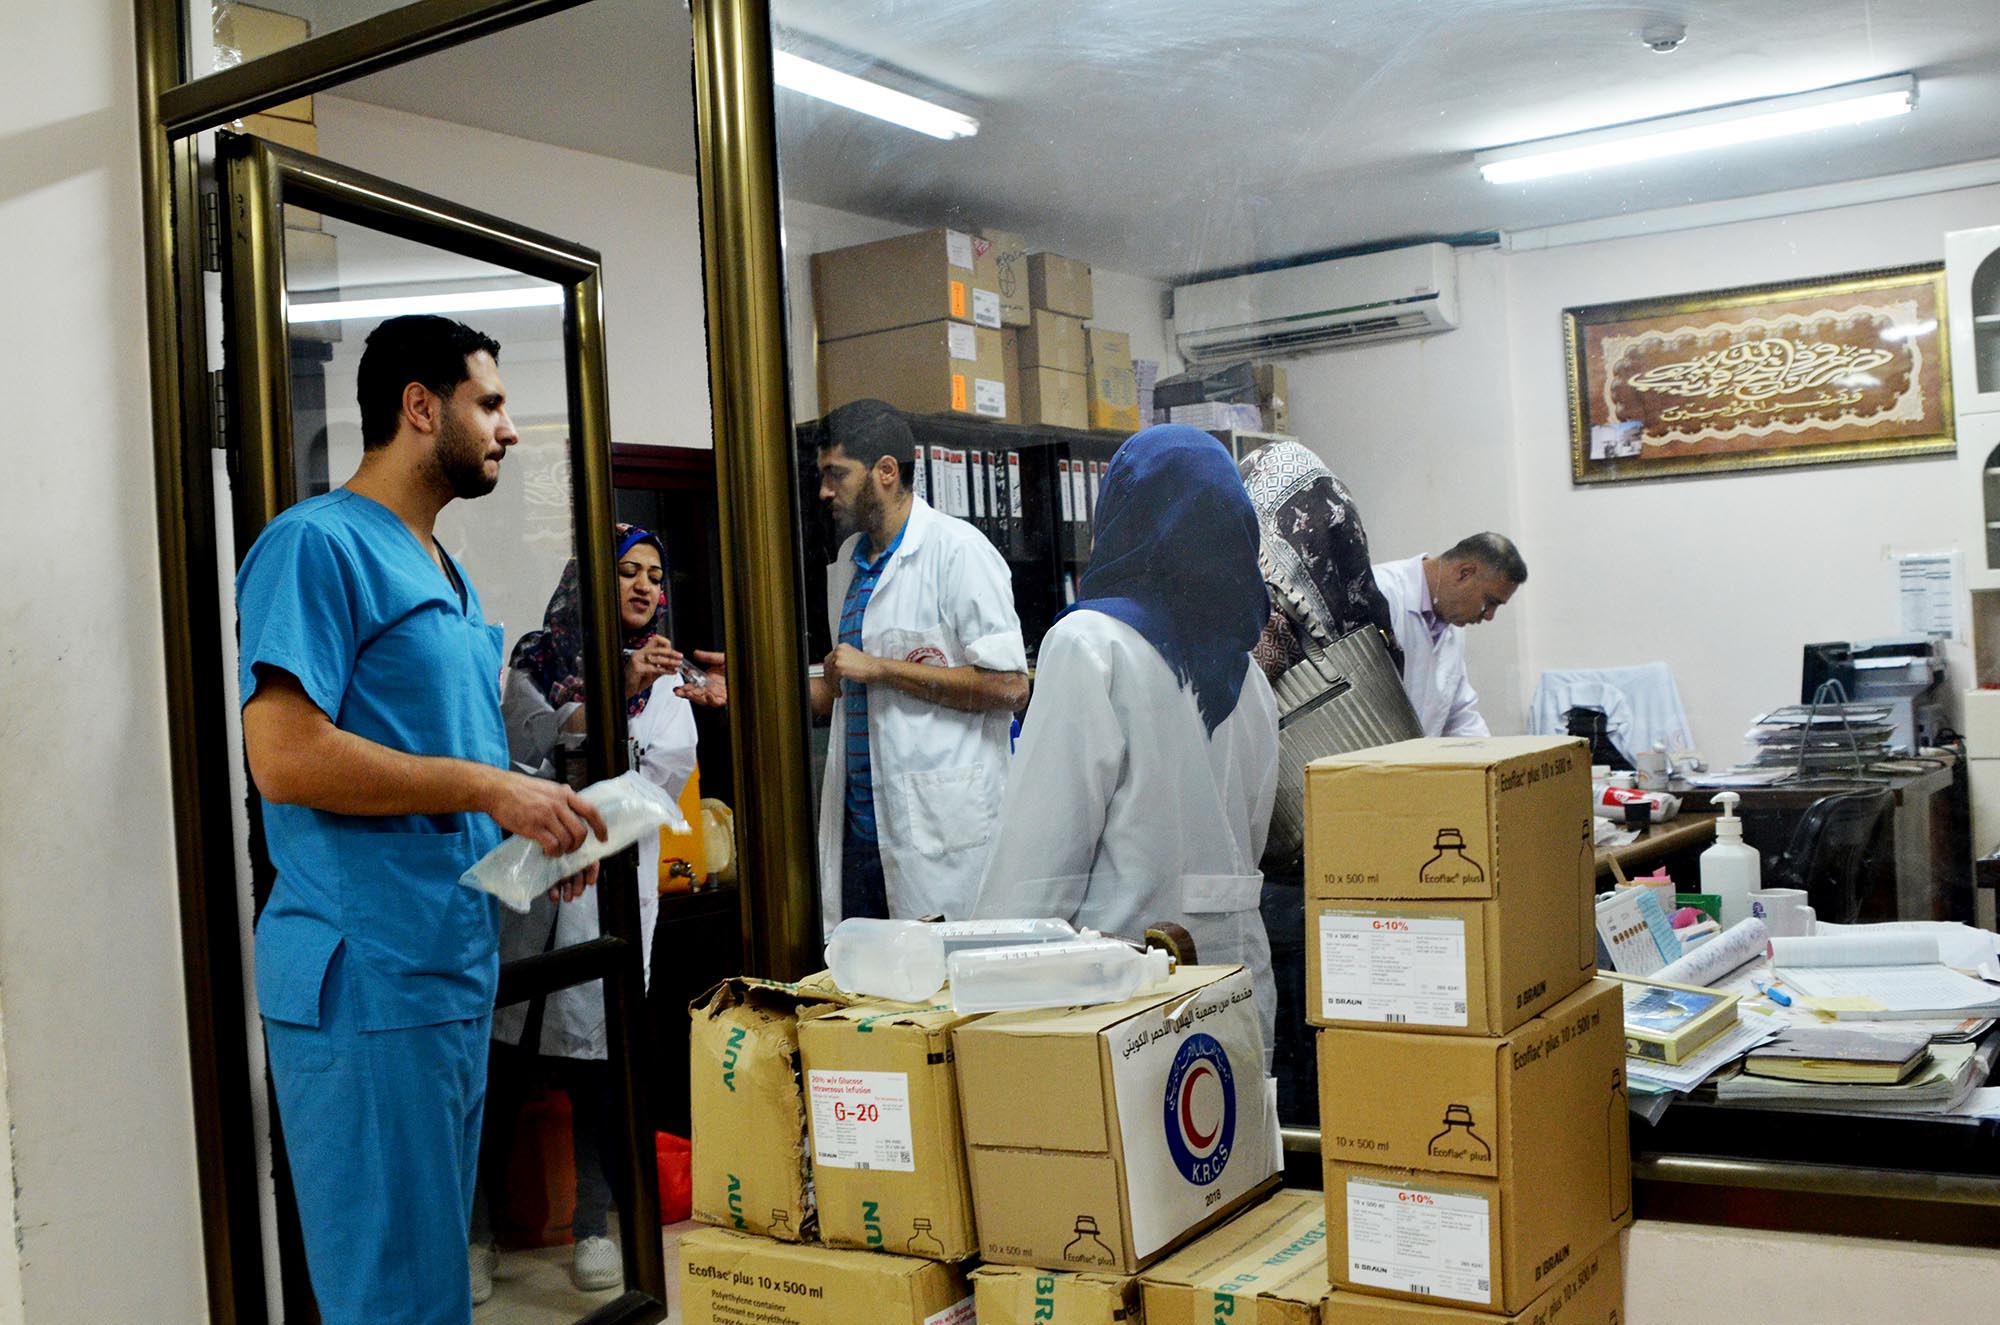 Al Quds Hospital receives a shipment of saline solution - an essential item. 